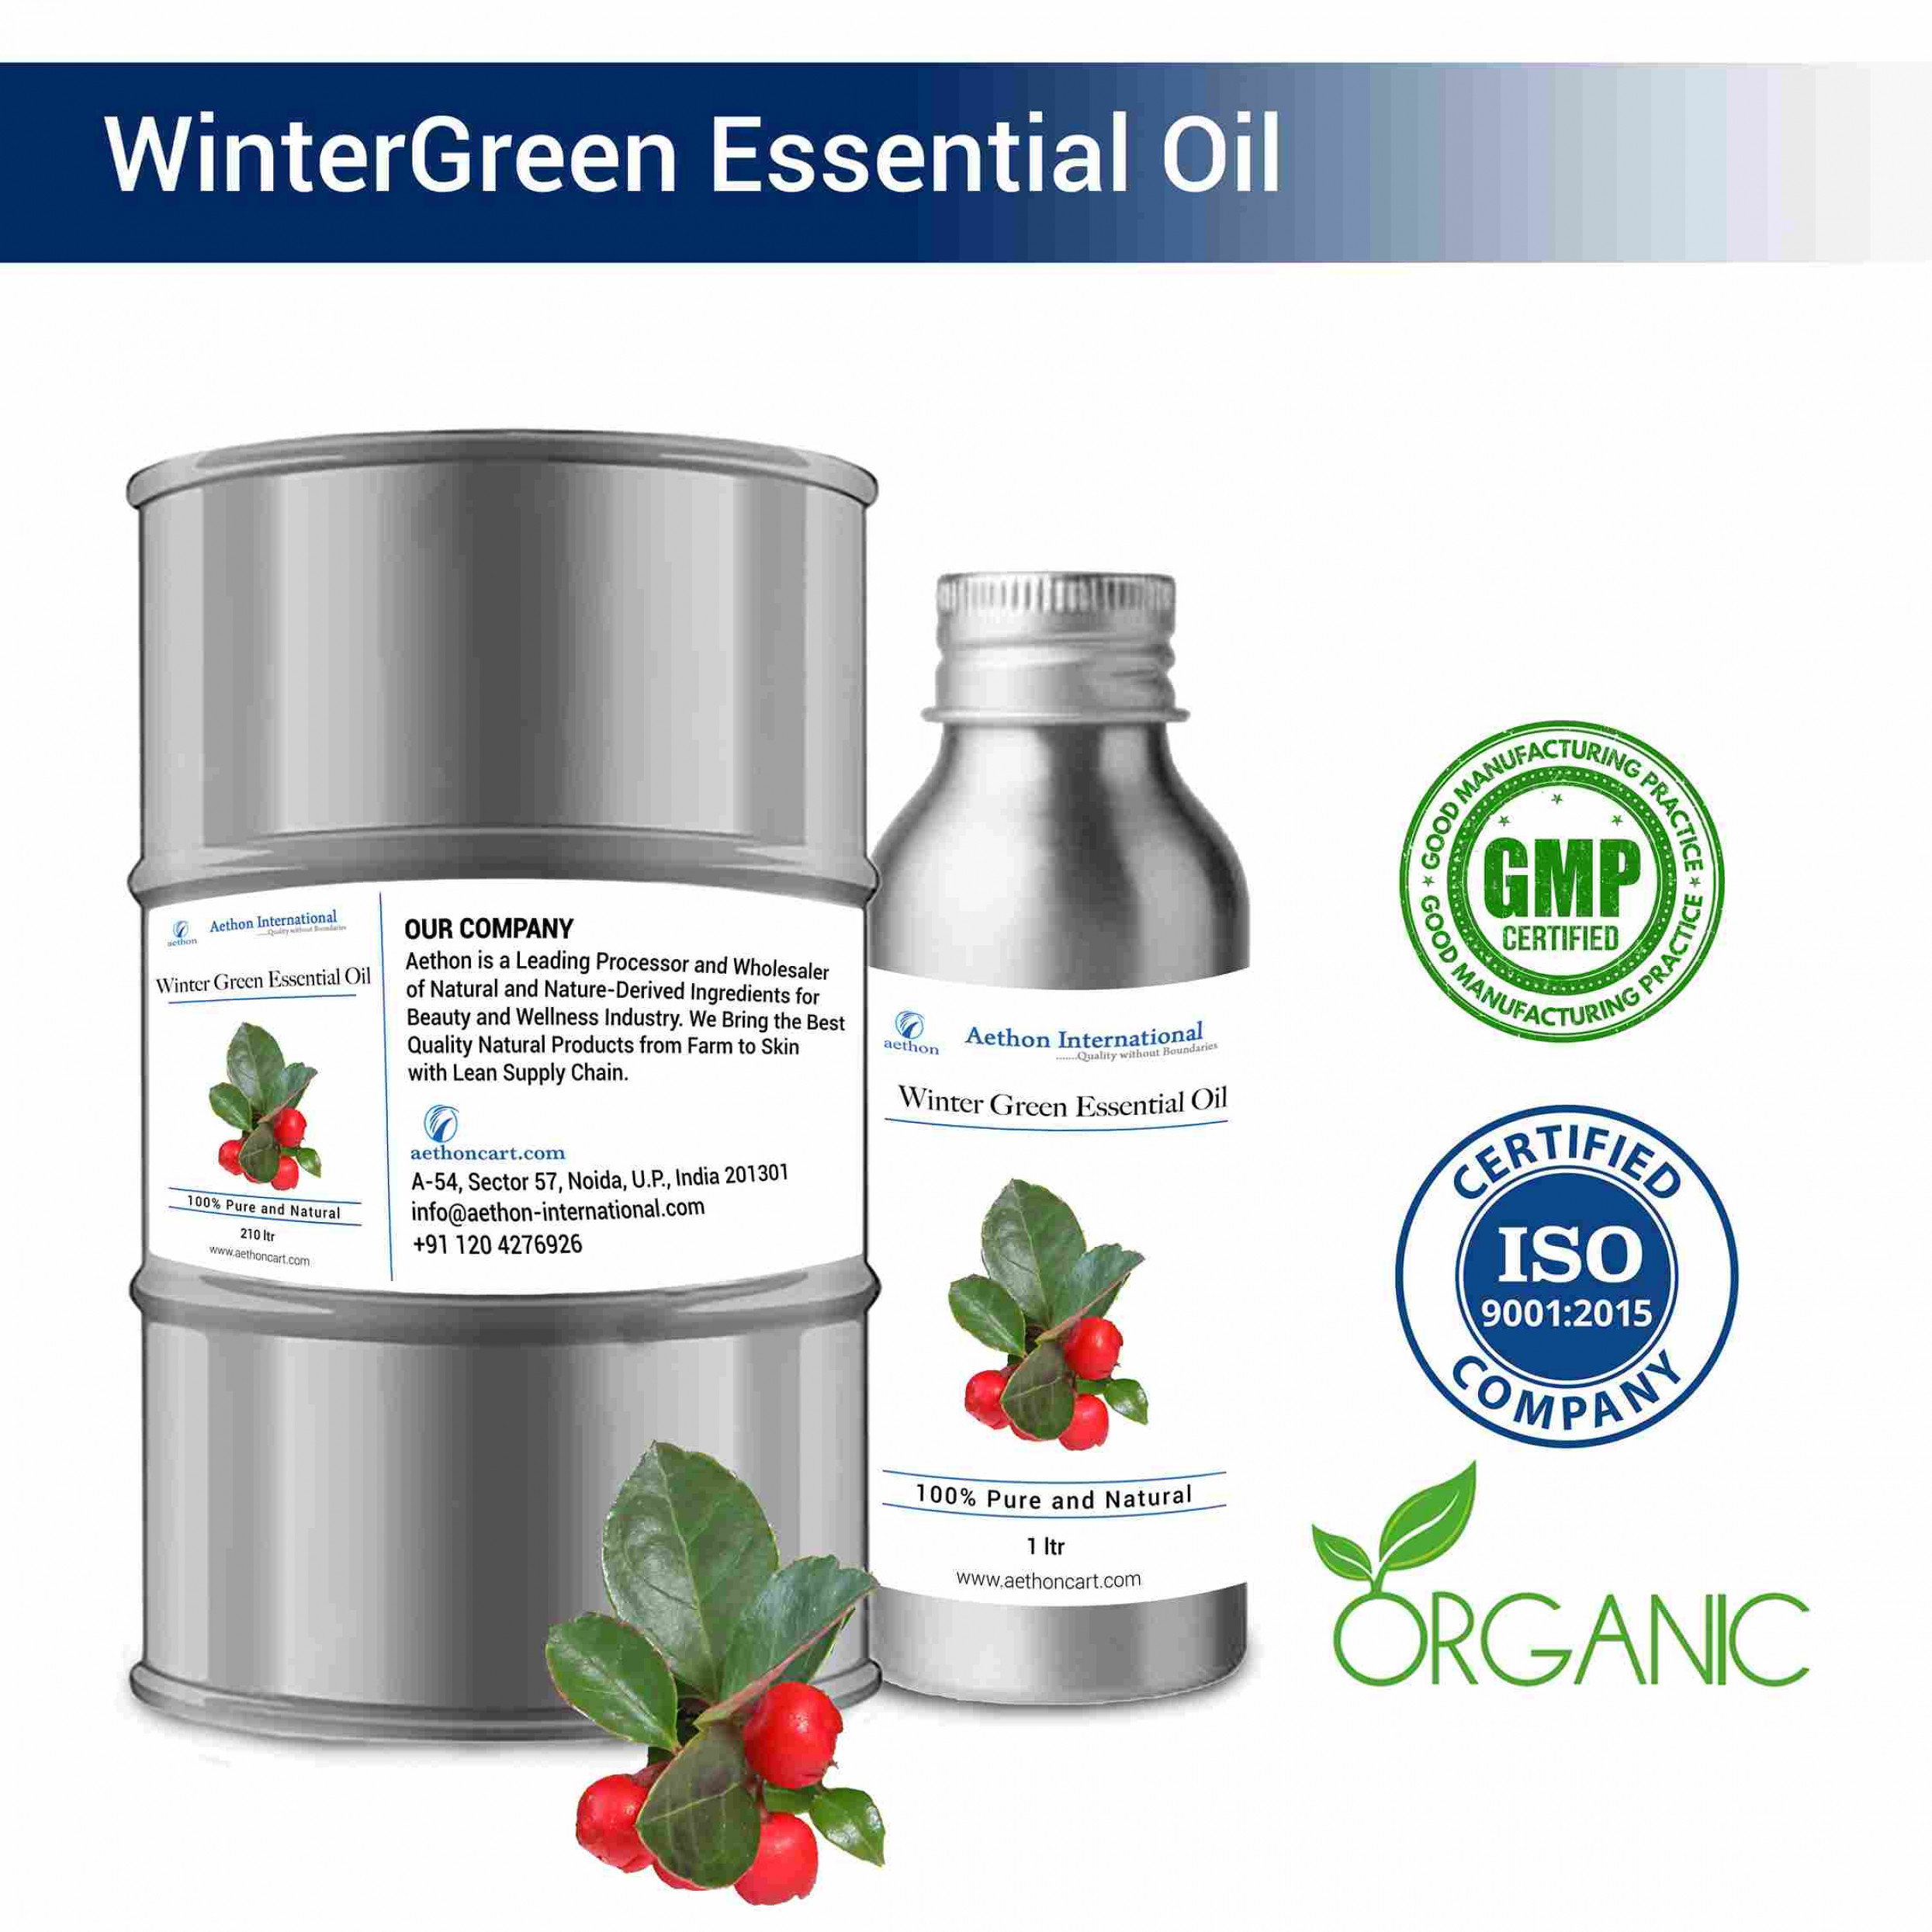 WinterGreen Essential Oil